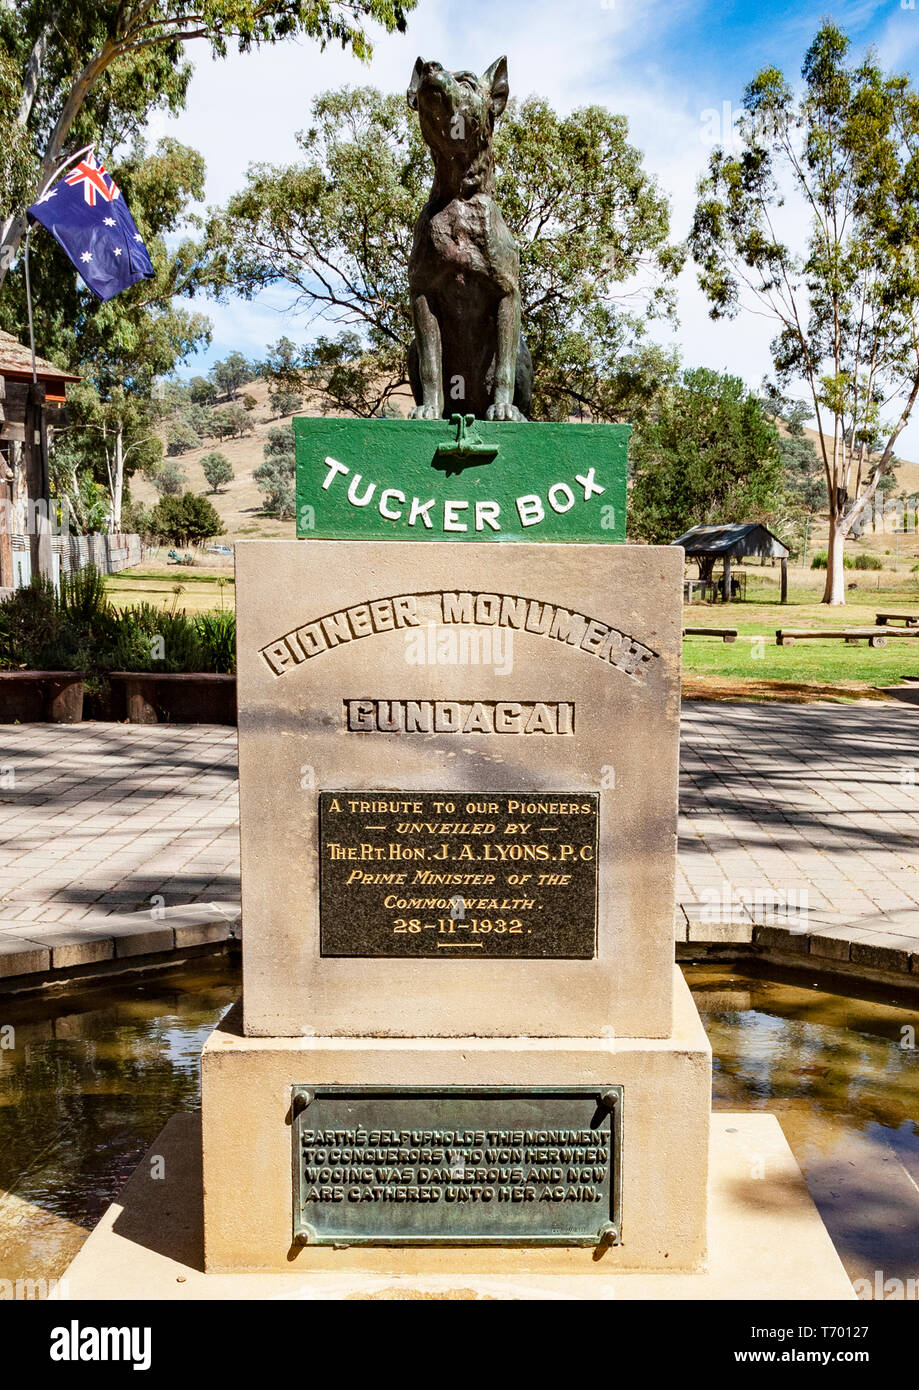 The Dog on the Tucker Box monument near Gundagai in New South Wales, Australia Stock Photo